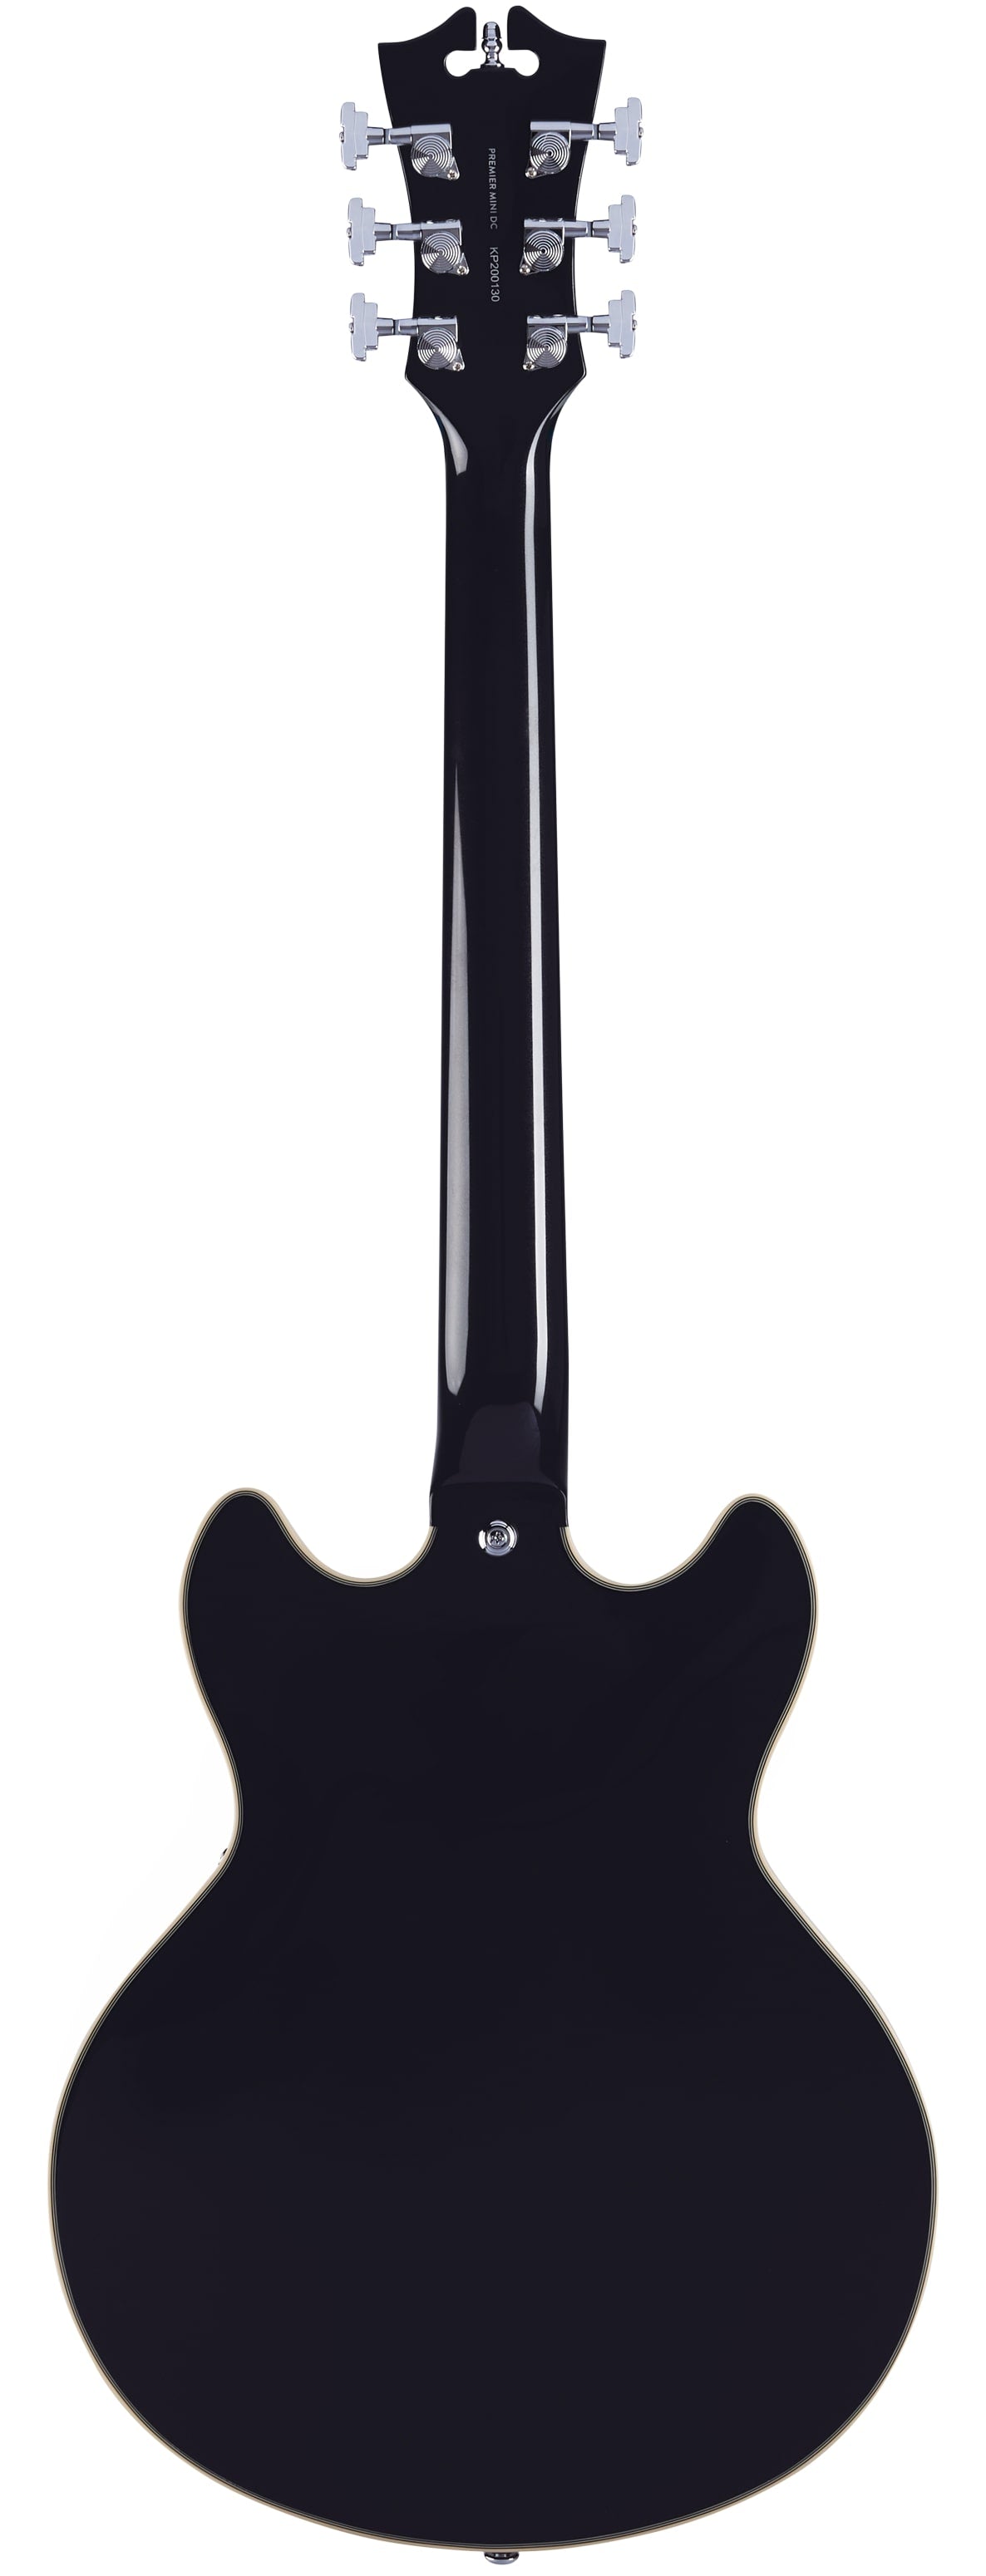 D'Angelico Premier Mini DC Semi-hollowbody Electric Guitar, Black Flake DAPMINIDCBLFCS